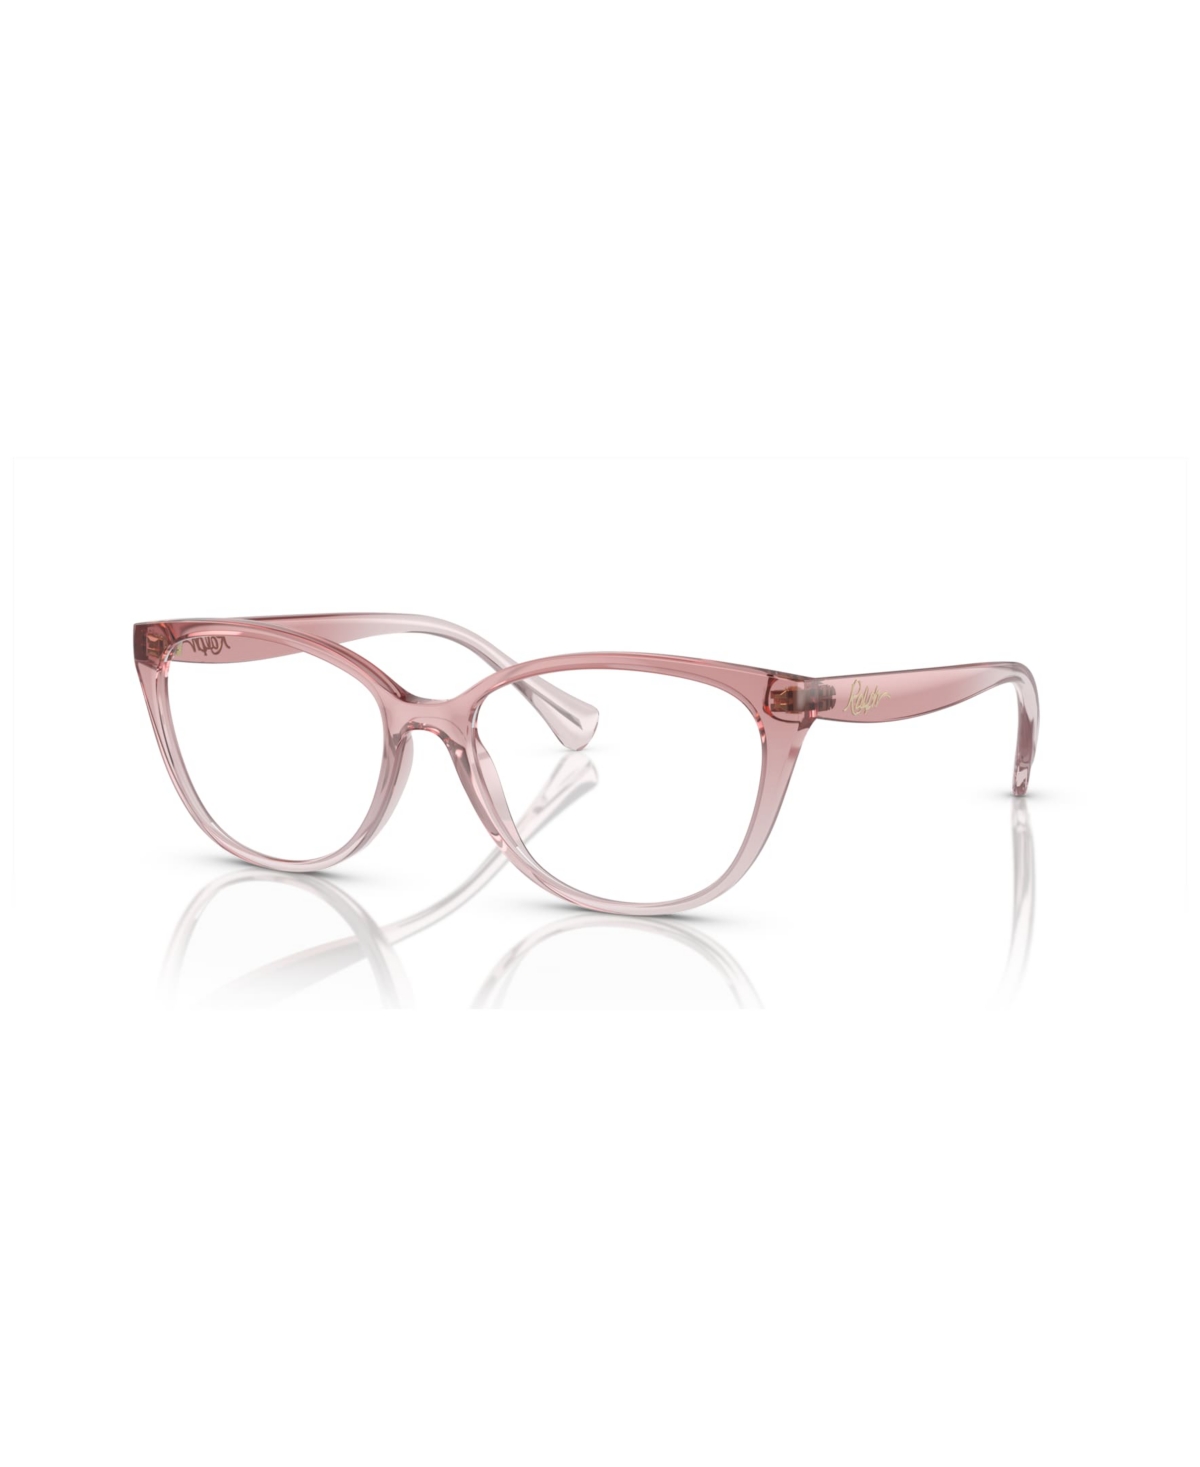 Women's Eyeglasses, RA7135 - Shiny Trasparent Brown